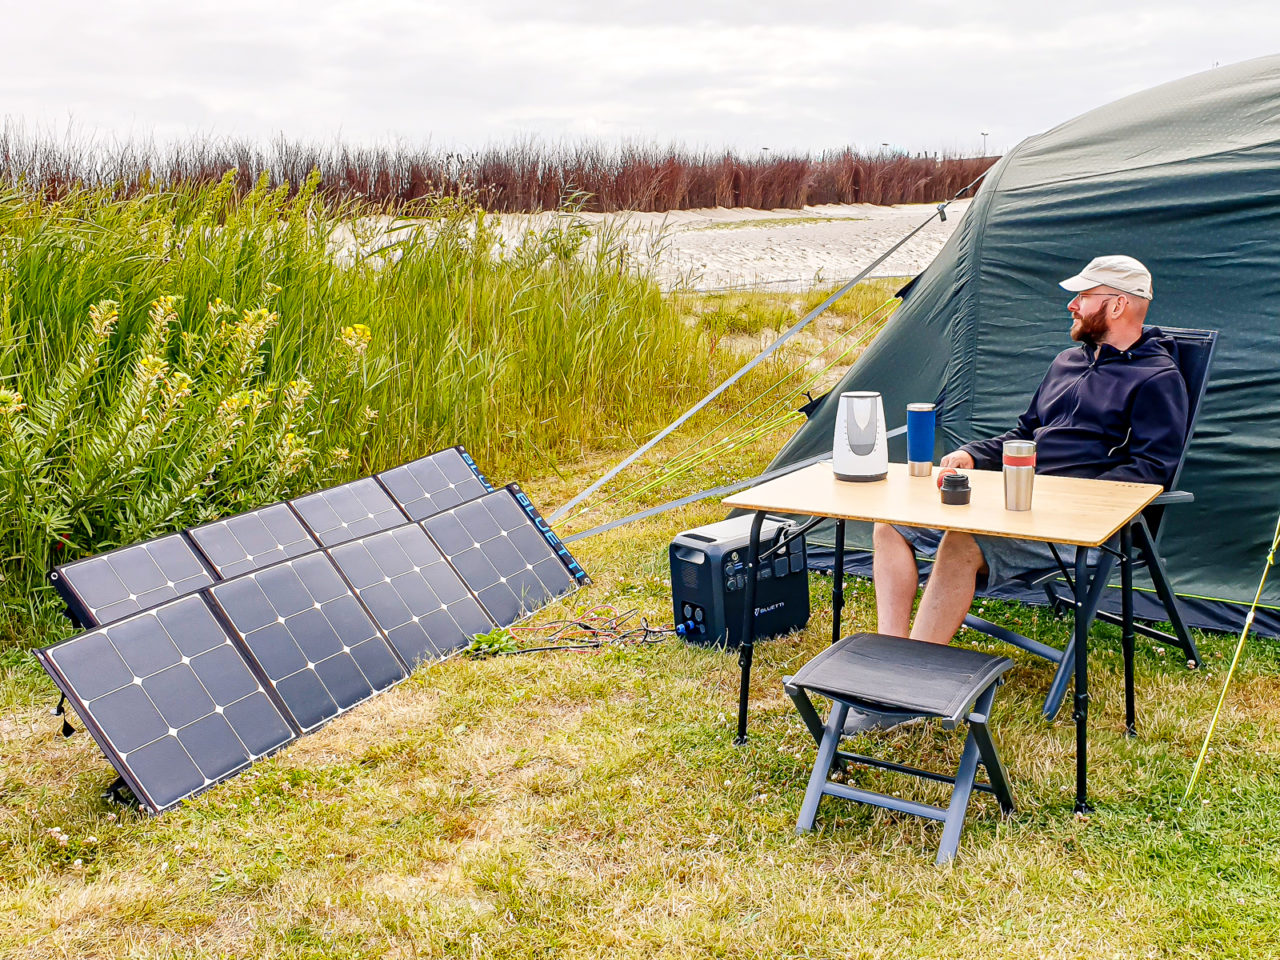 Solargenerator Bluetti Ac200max, Solar Panel Bluetti Sp200, Campingplatz, Nordsee, Zelt, Campingtisch, Kaffee Trinken